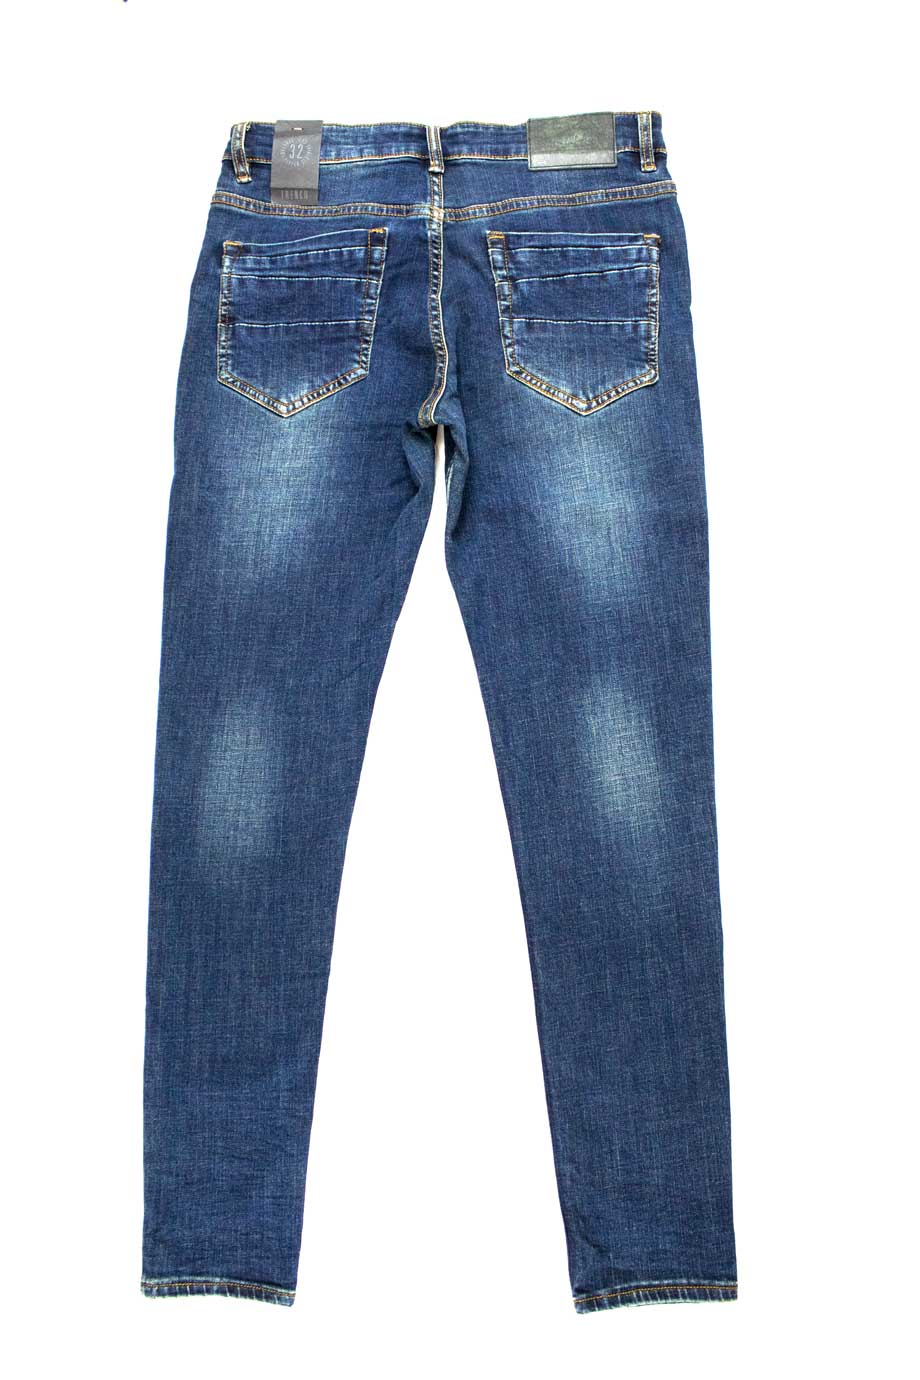 SPCC Trench Skinny Jeans Indigo - BOSSINI SA